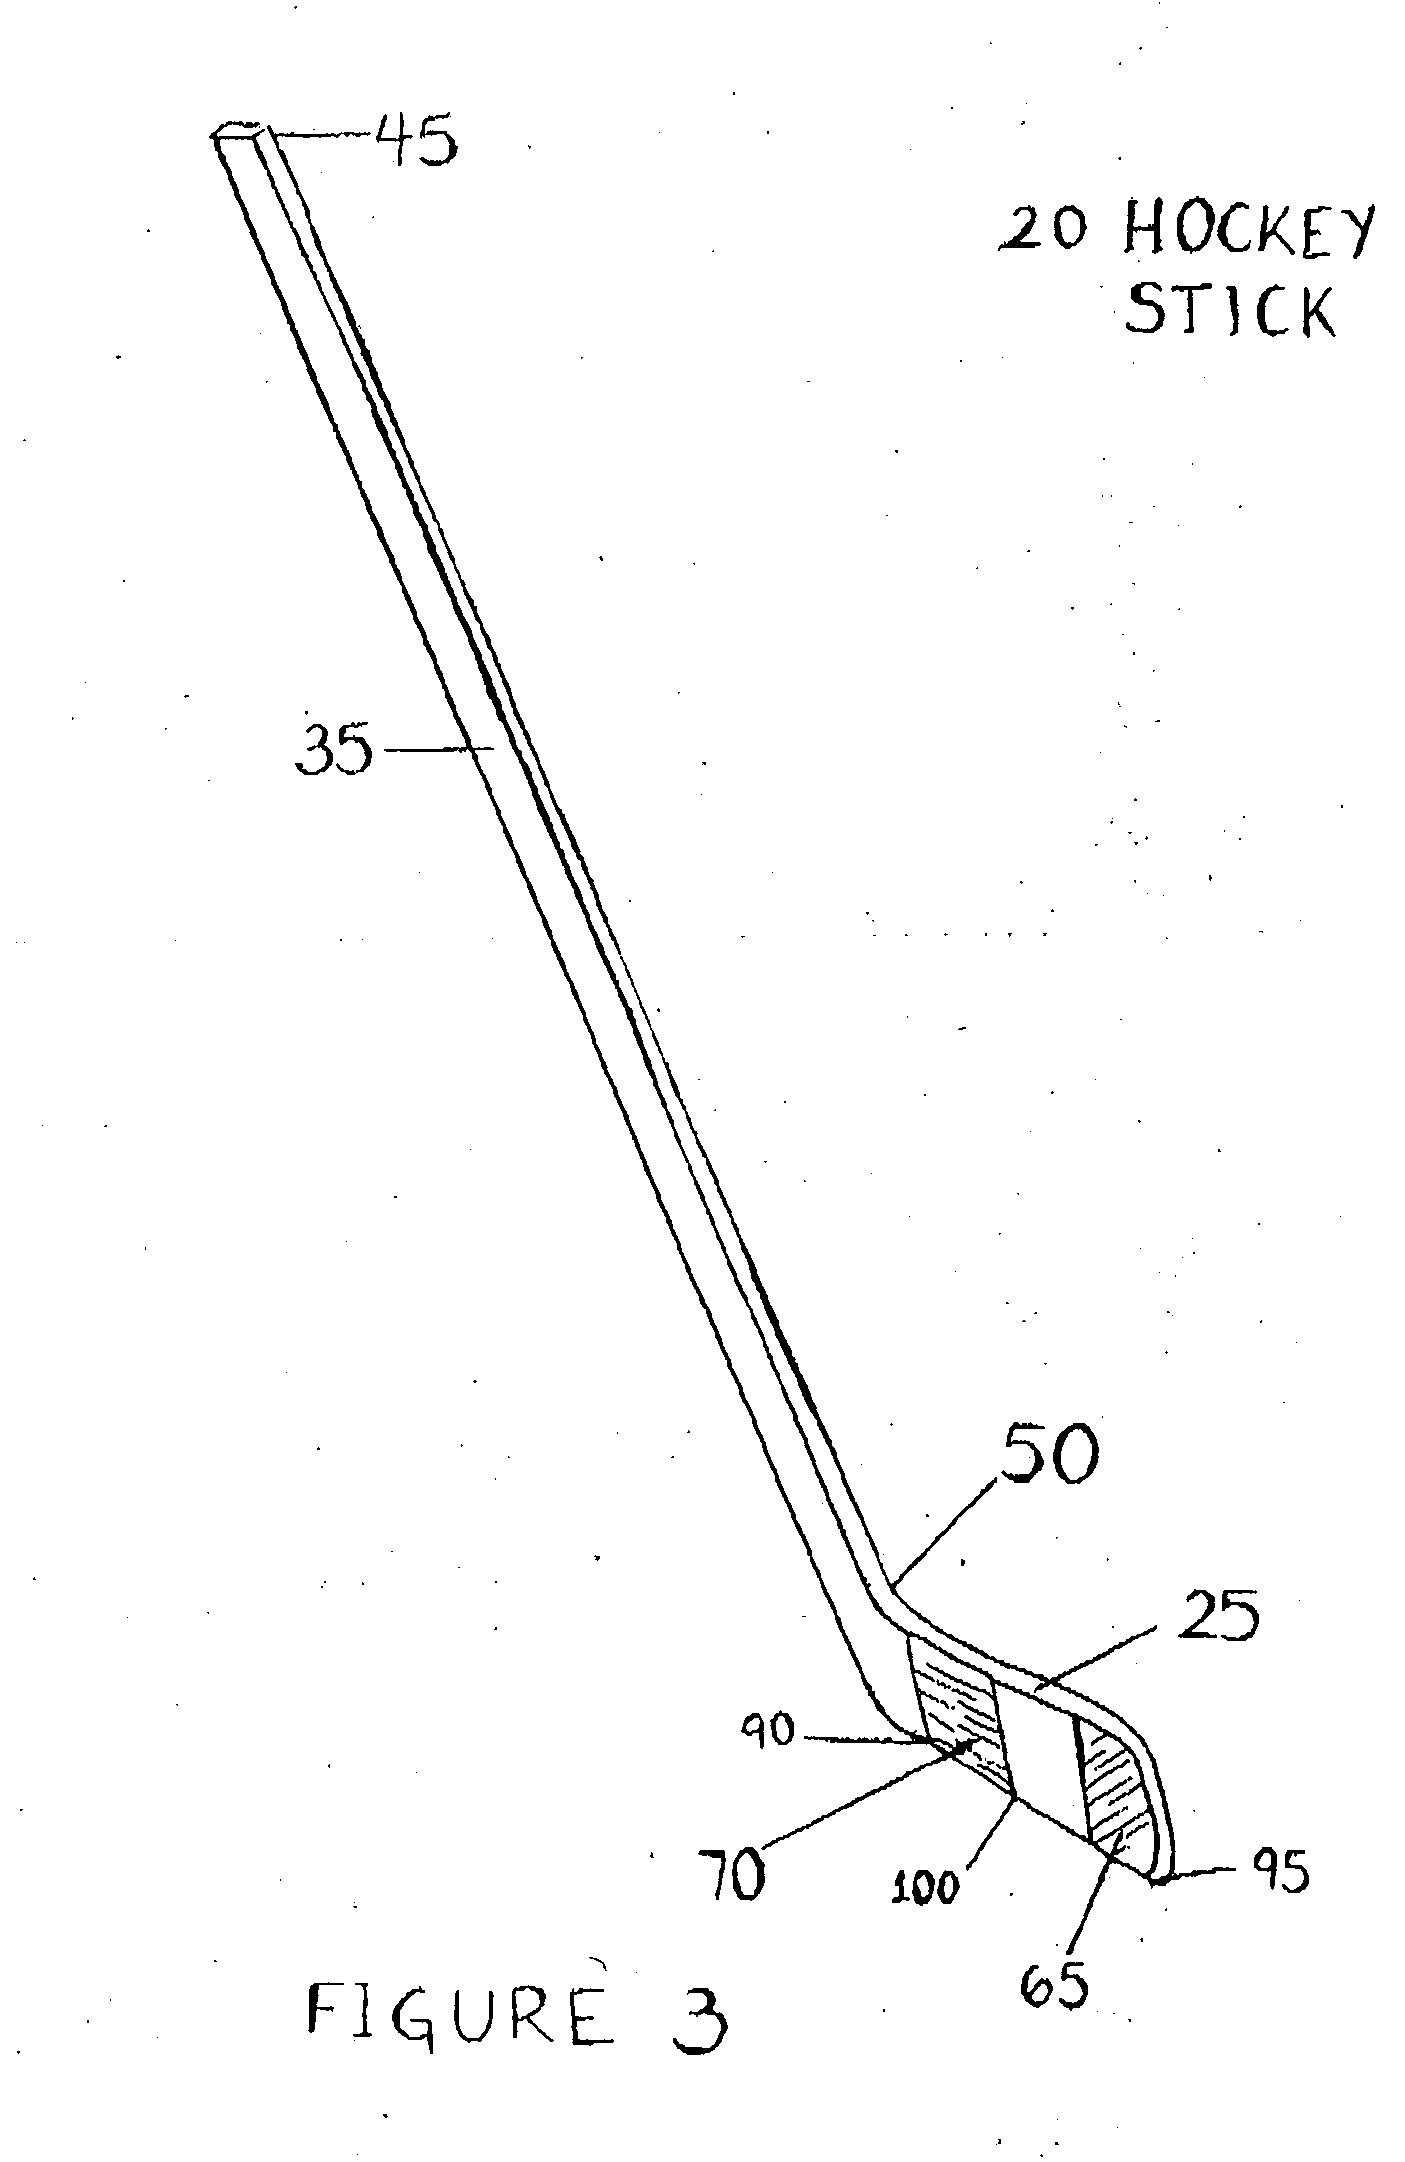 Method and apparatus for hockey stick handling training